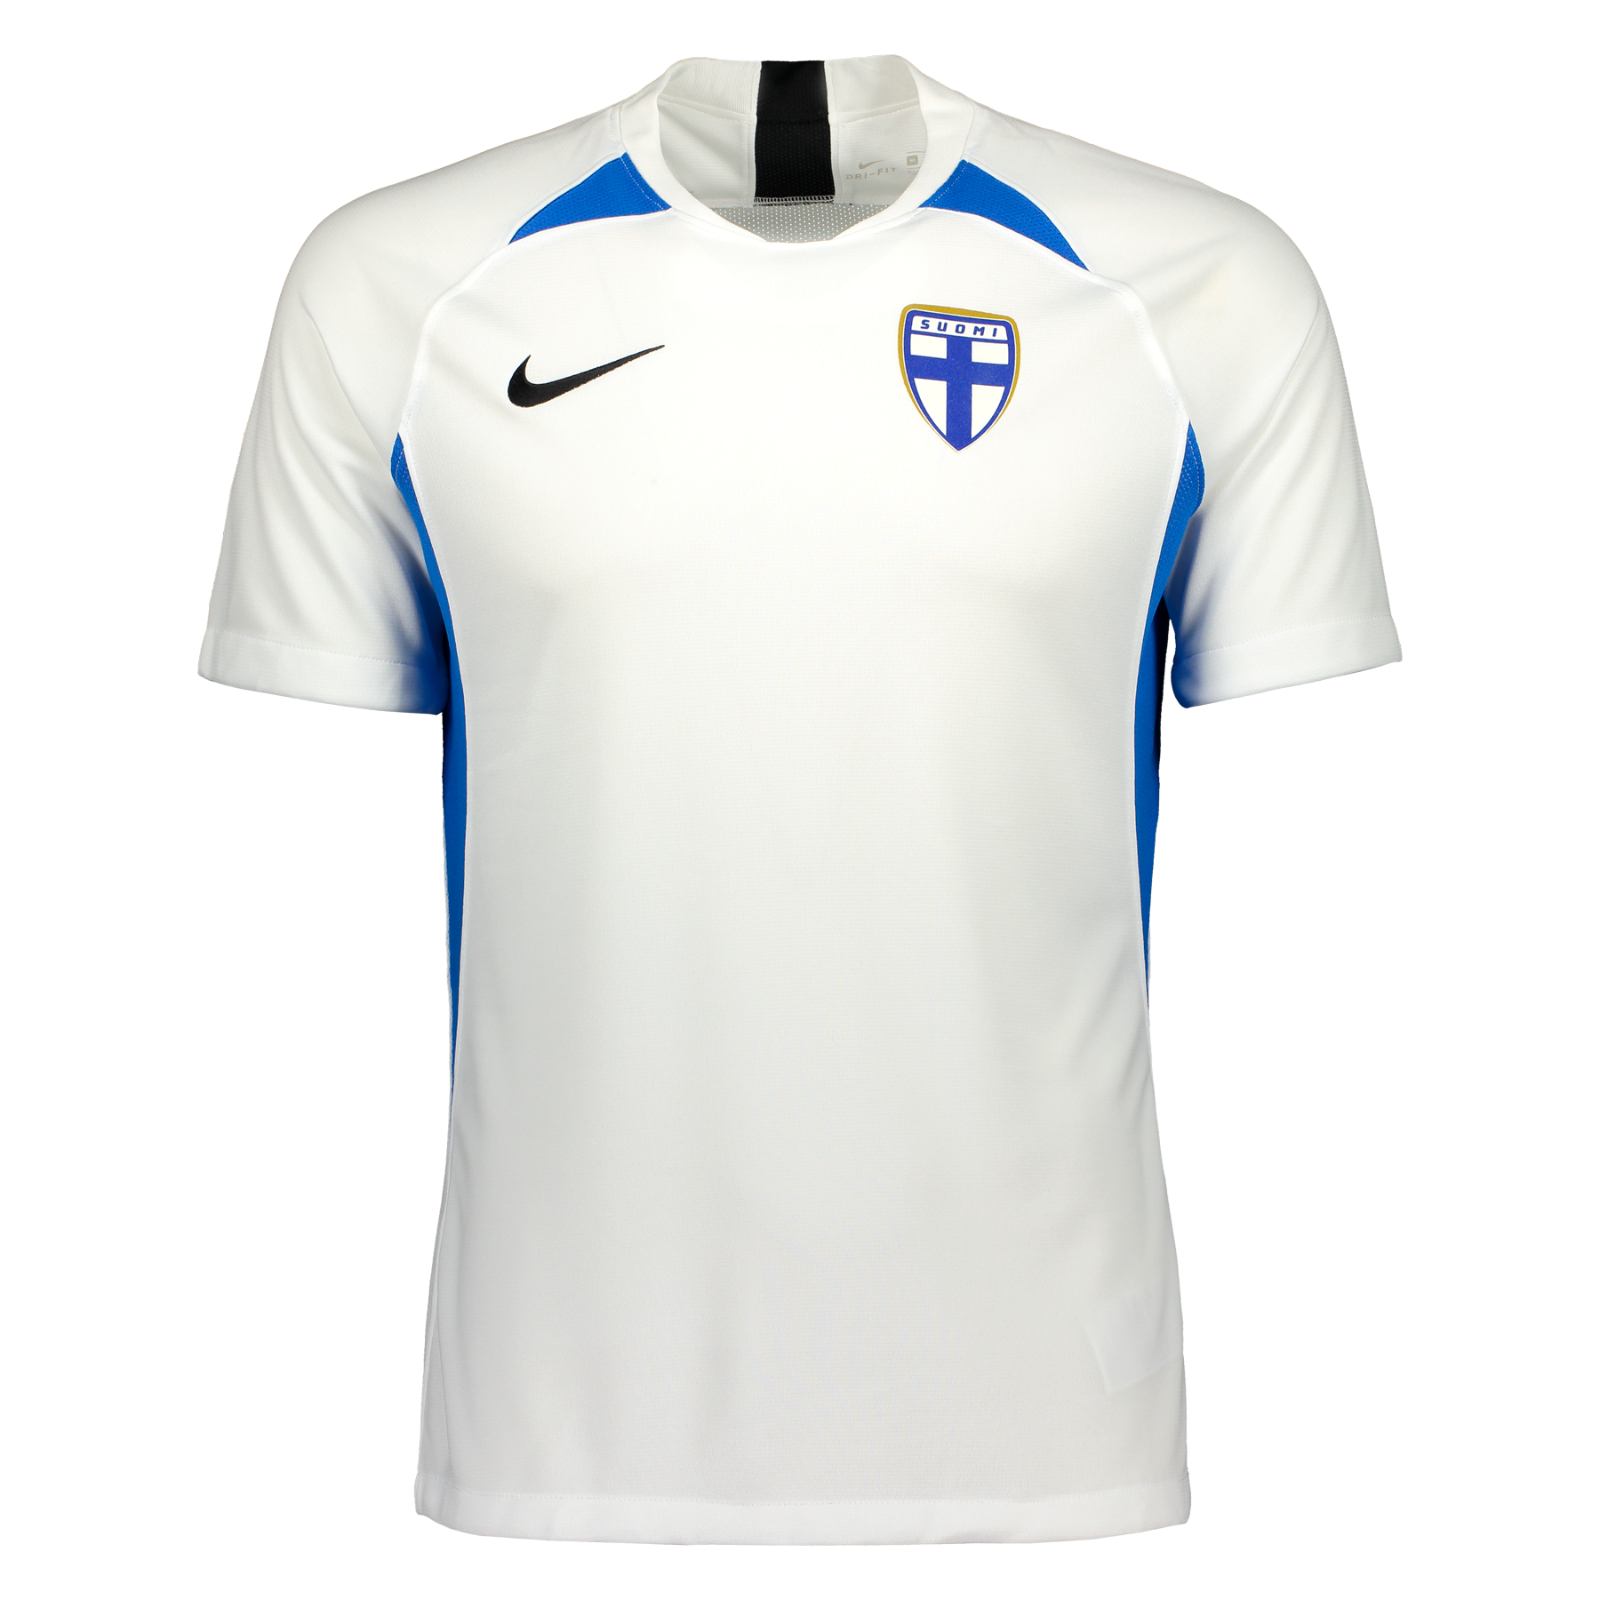 Finlandia FanShirt camiseta wm2018 S M L XL XXL 